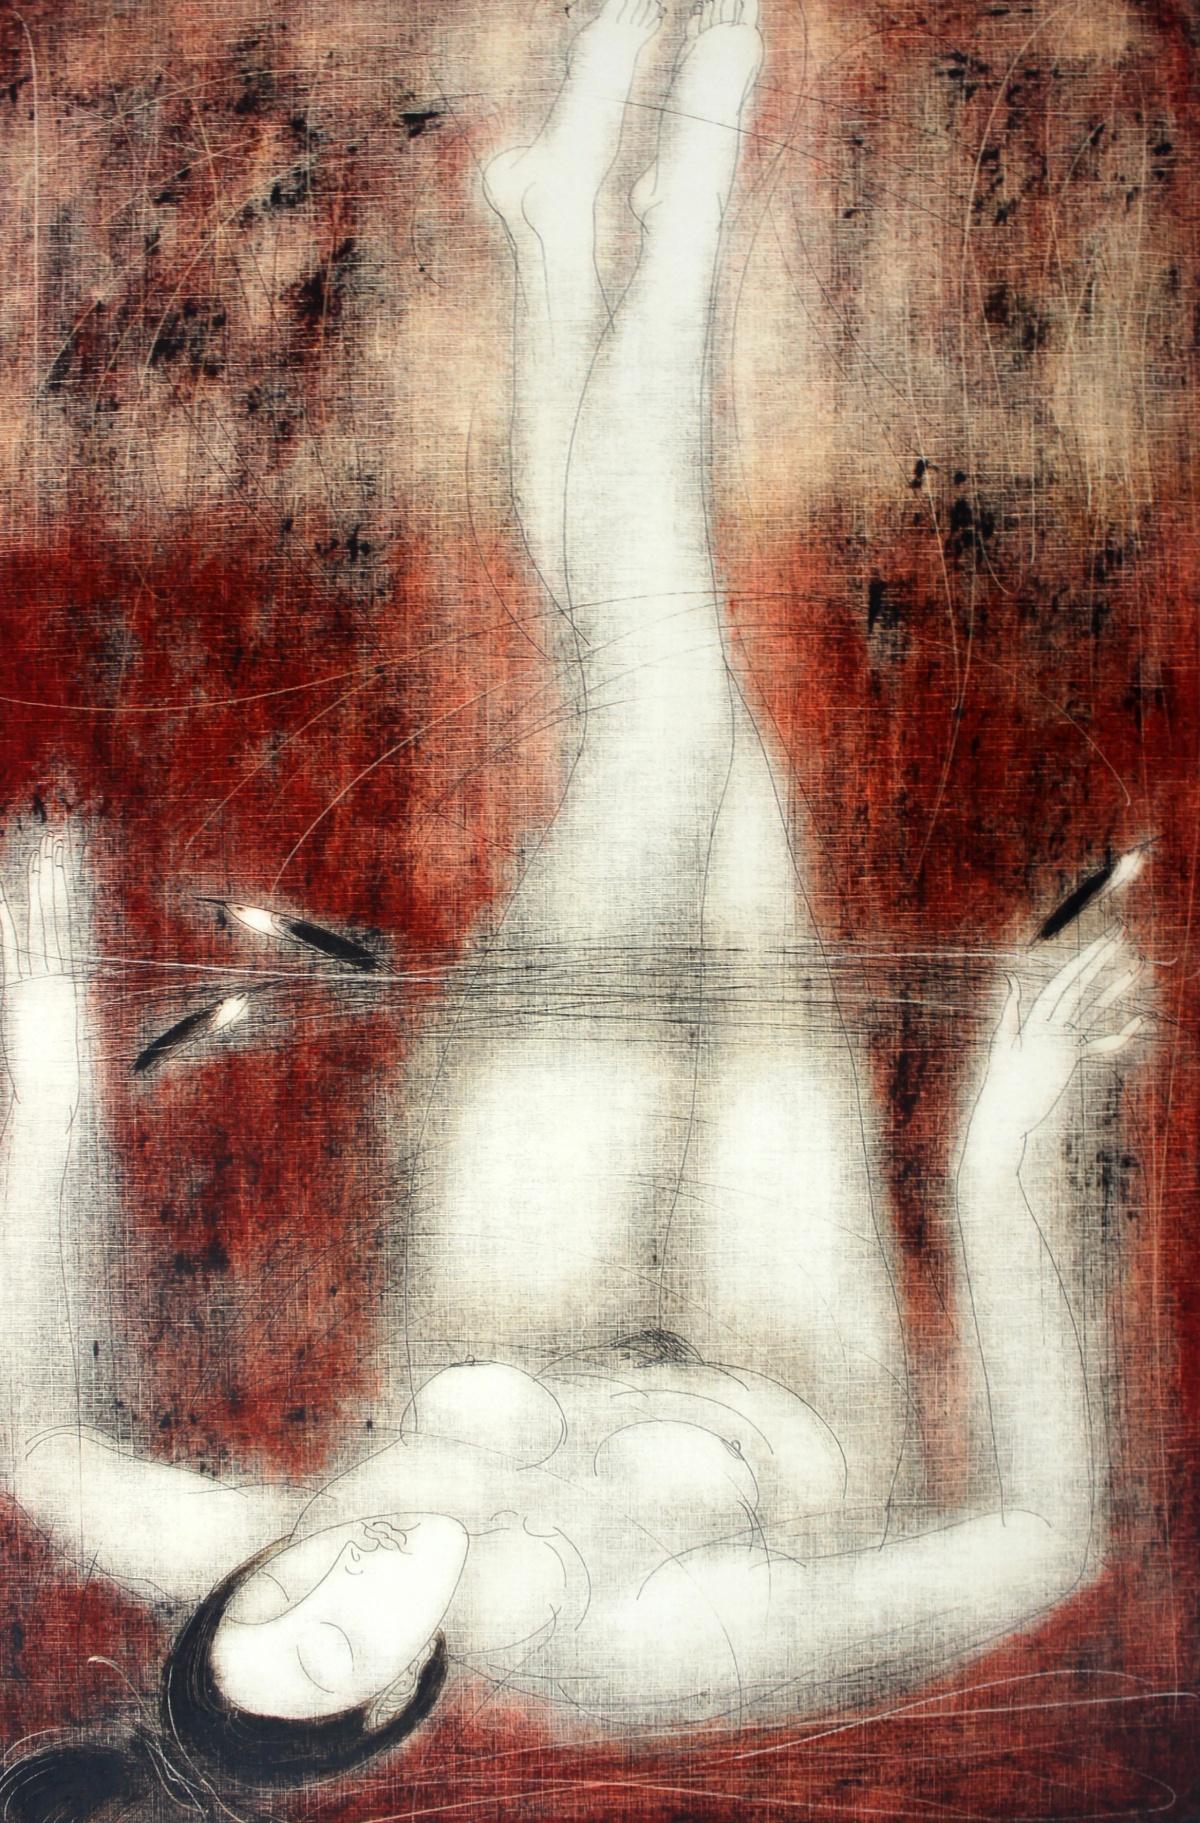 Siergiej Timochow Nude Print - Nude with raised legs - XXI Century, Contemporary Figurative Monotype Print